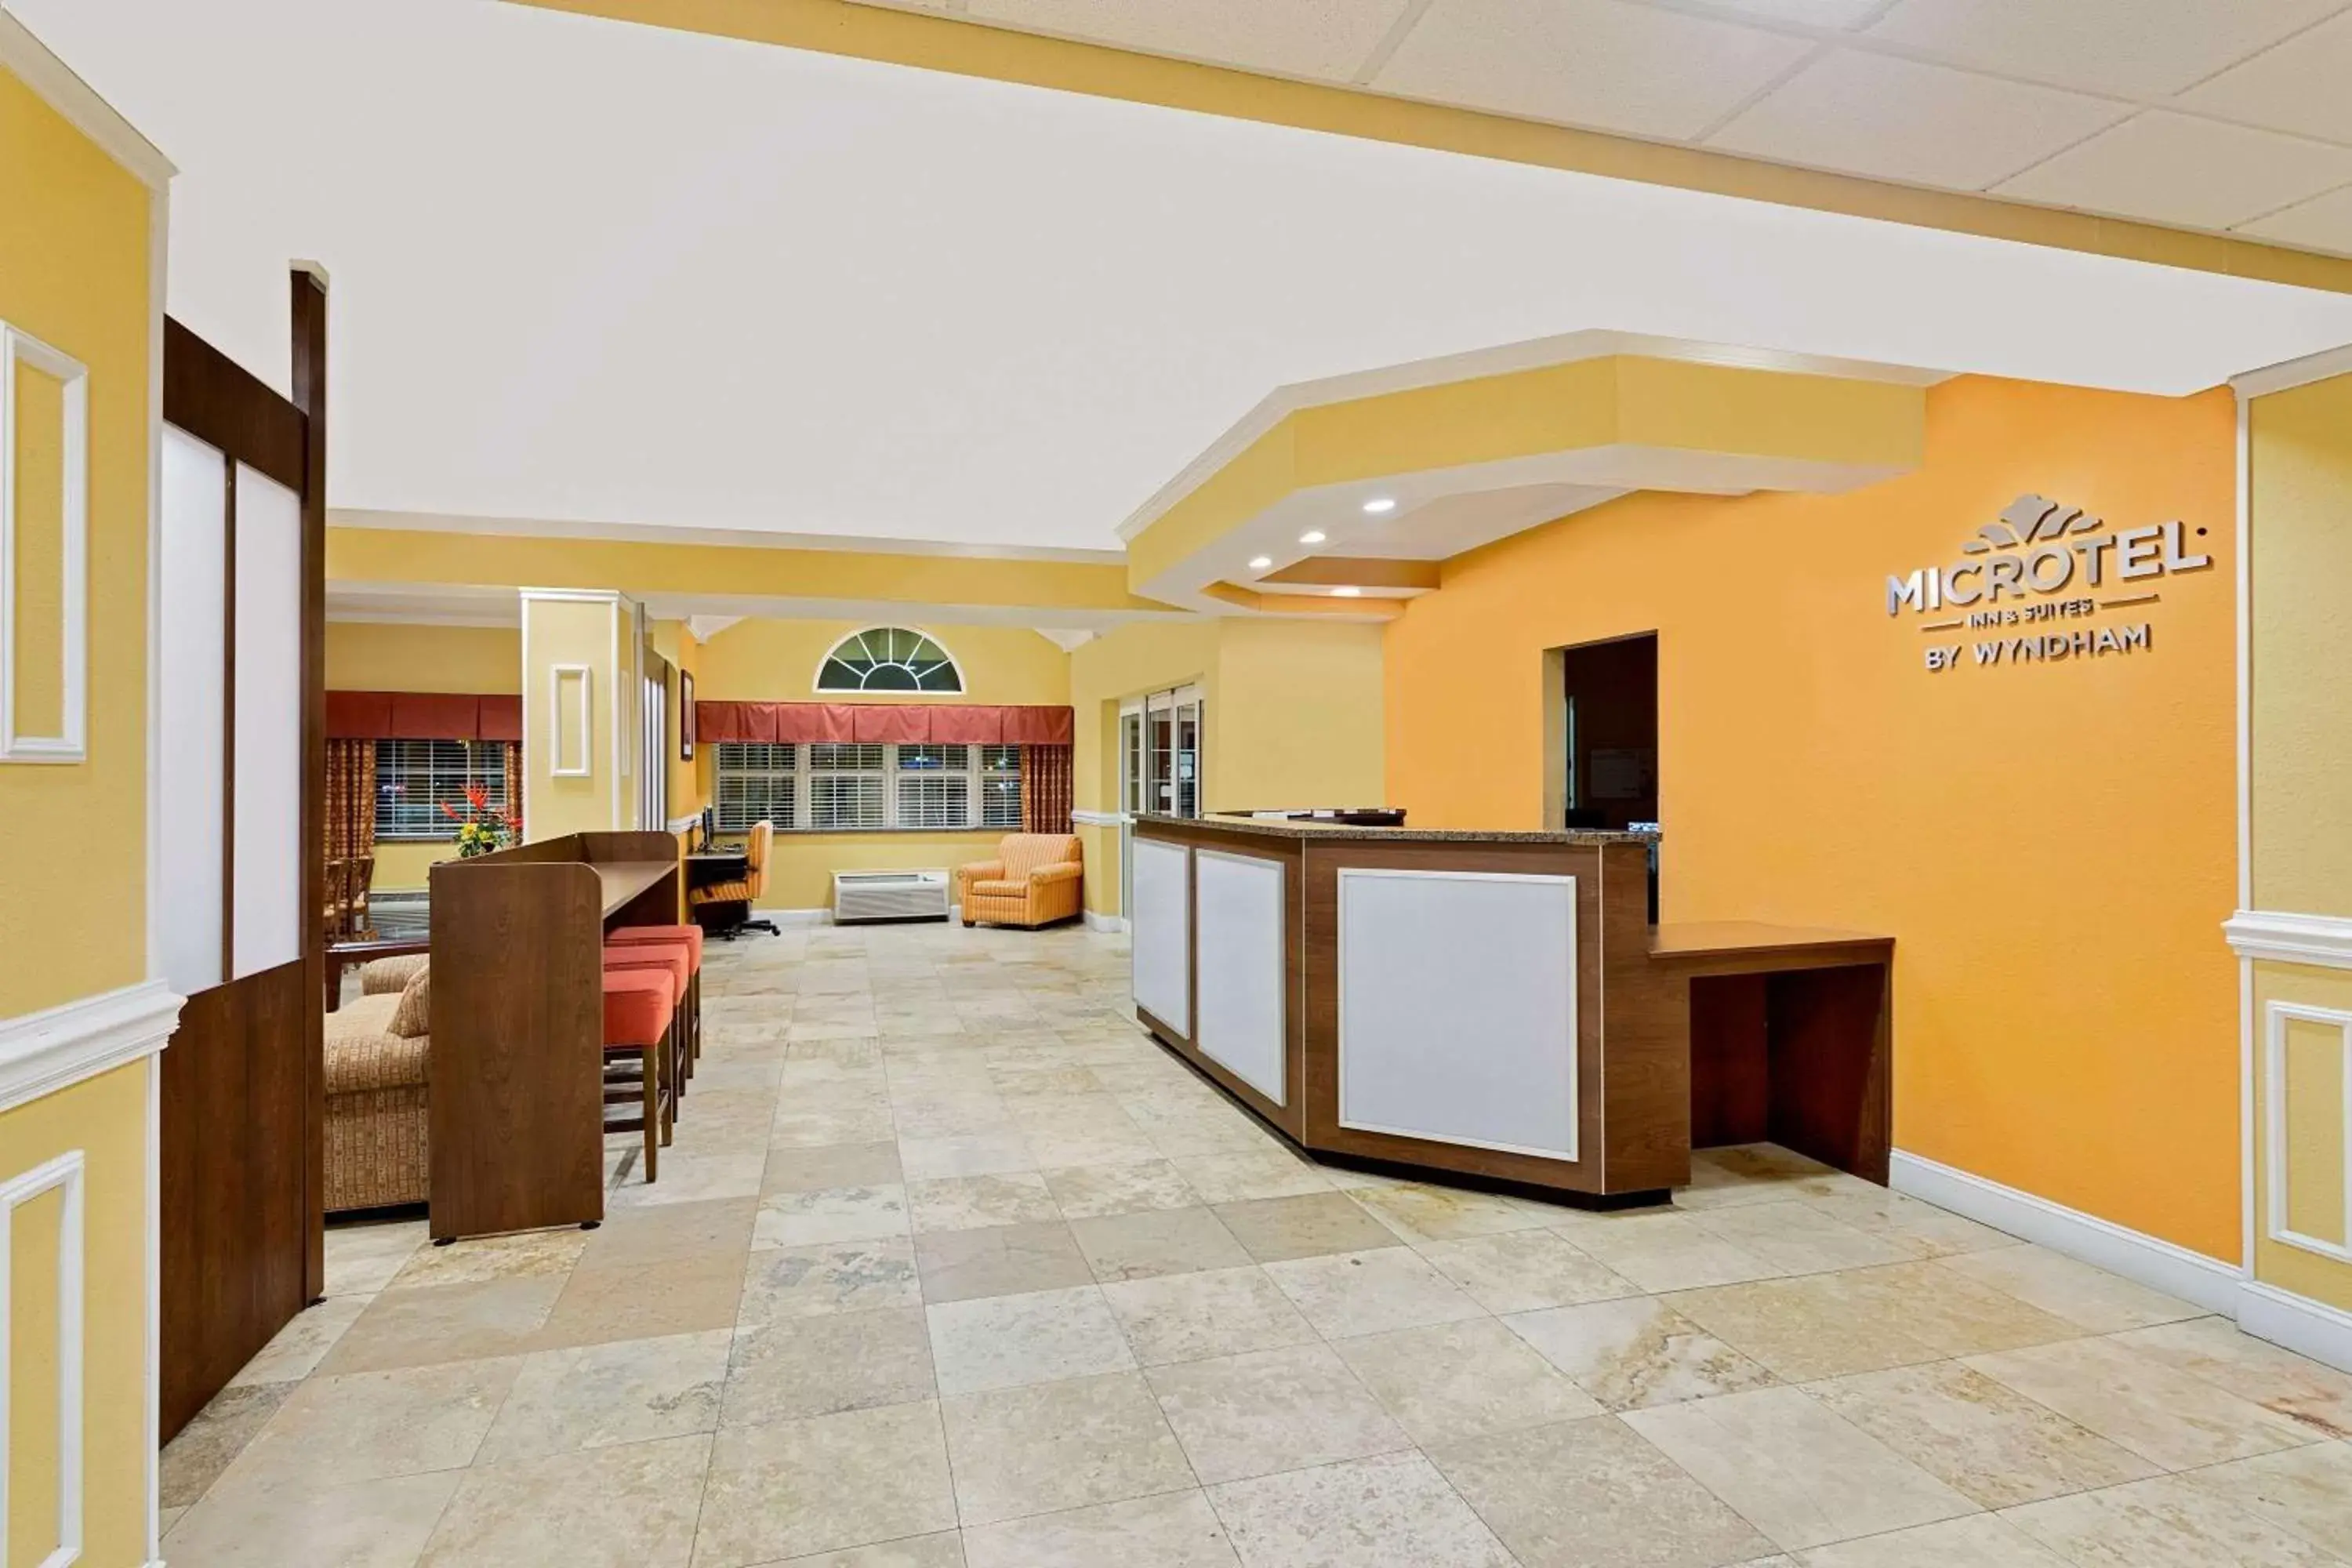 Lobby or reception, Lobby/Reception in Microtel Inn & Suites by Wyndham Princeton